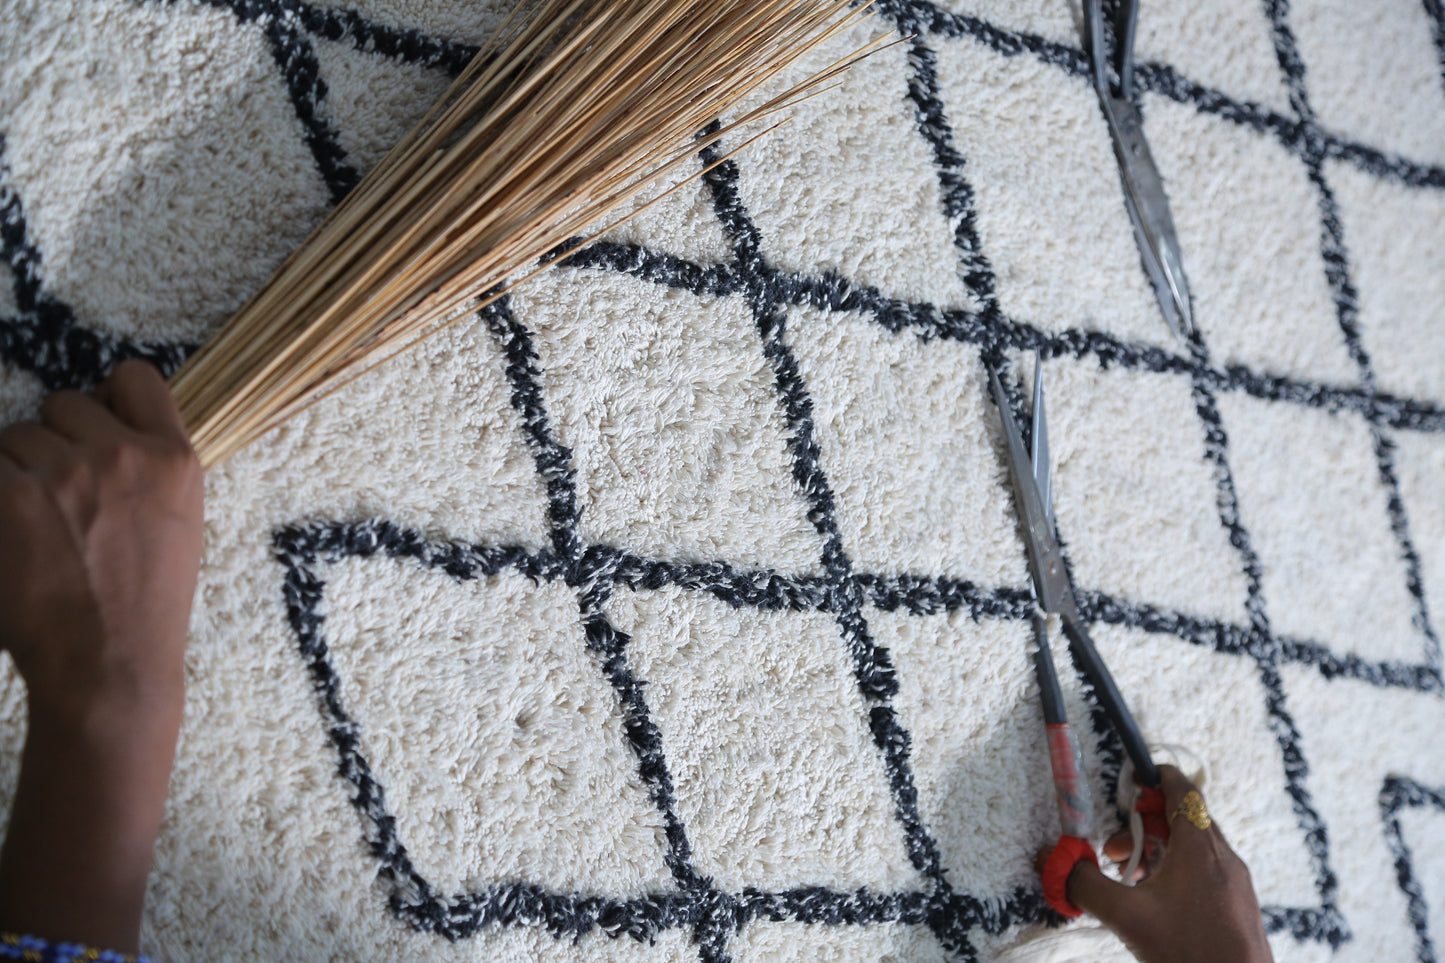 Lorena Canals Washable cotton feeding rug - Bereber Crisscross S - 120x170cm